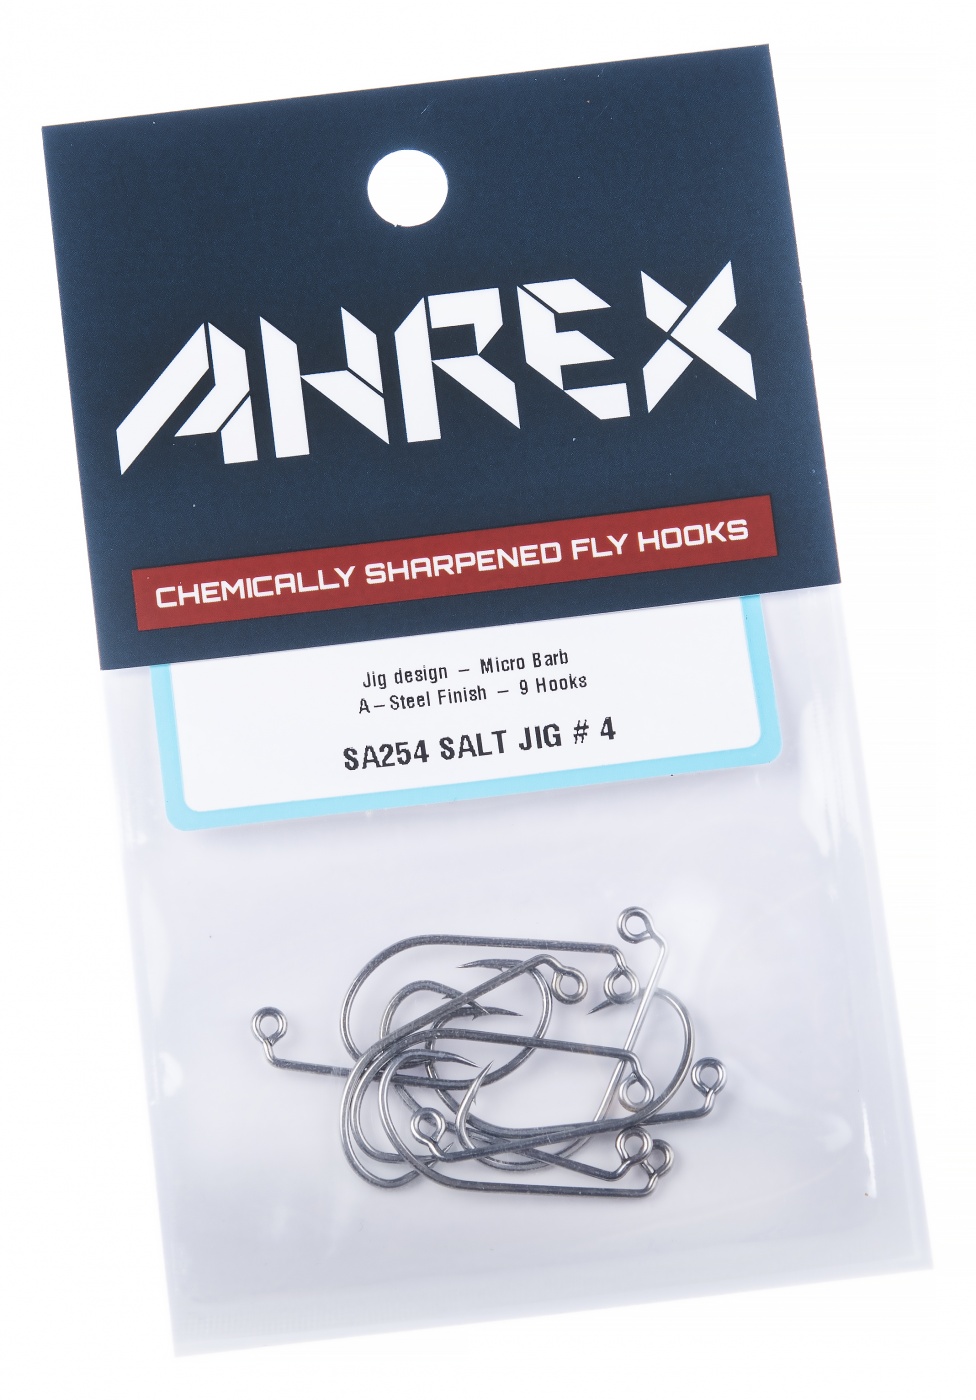 Ahrex SA254 Salt Jig Barbed #6 Fly Tying Hooks